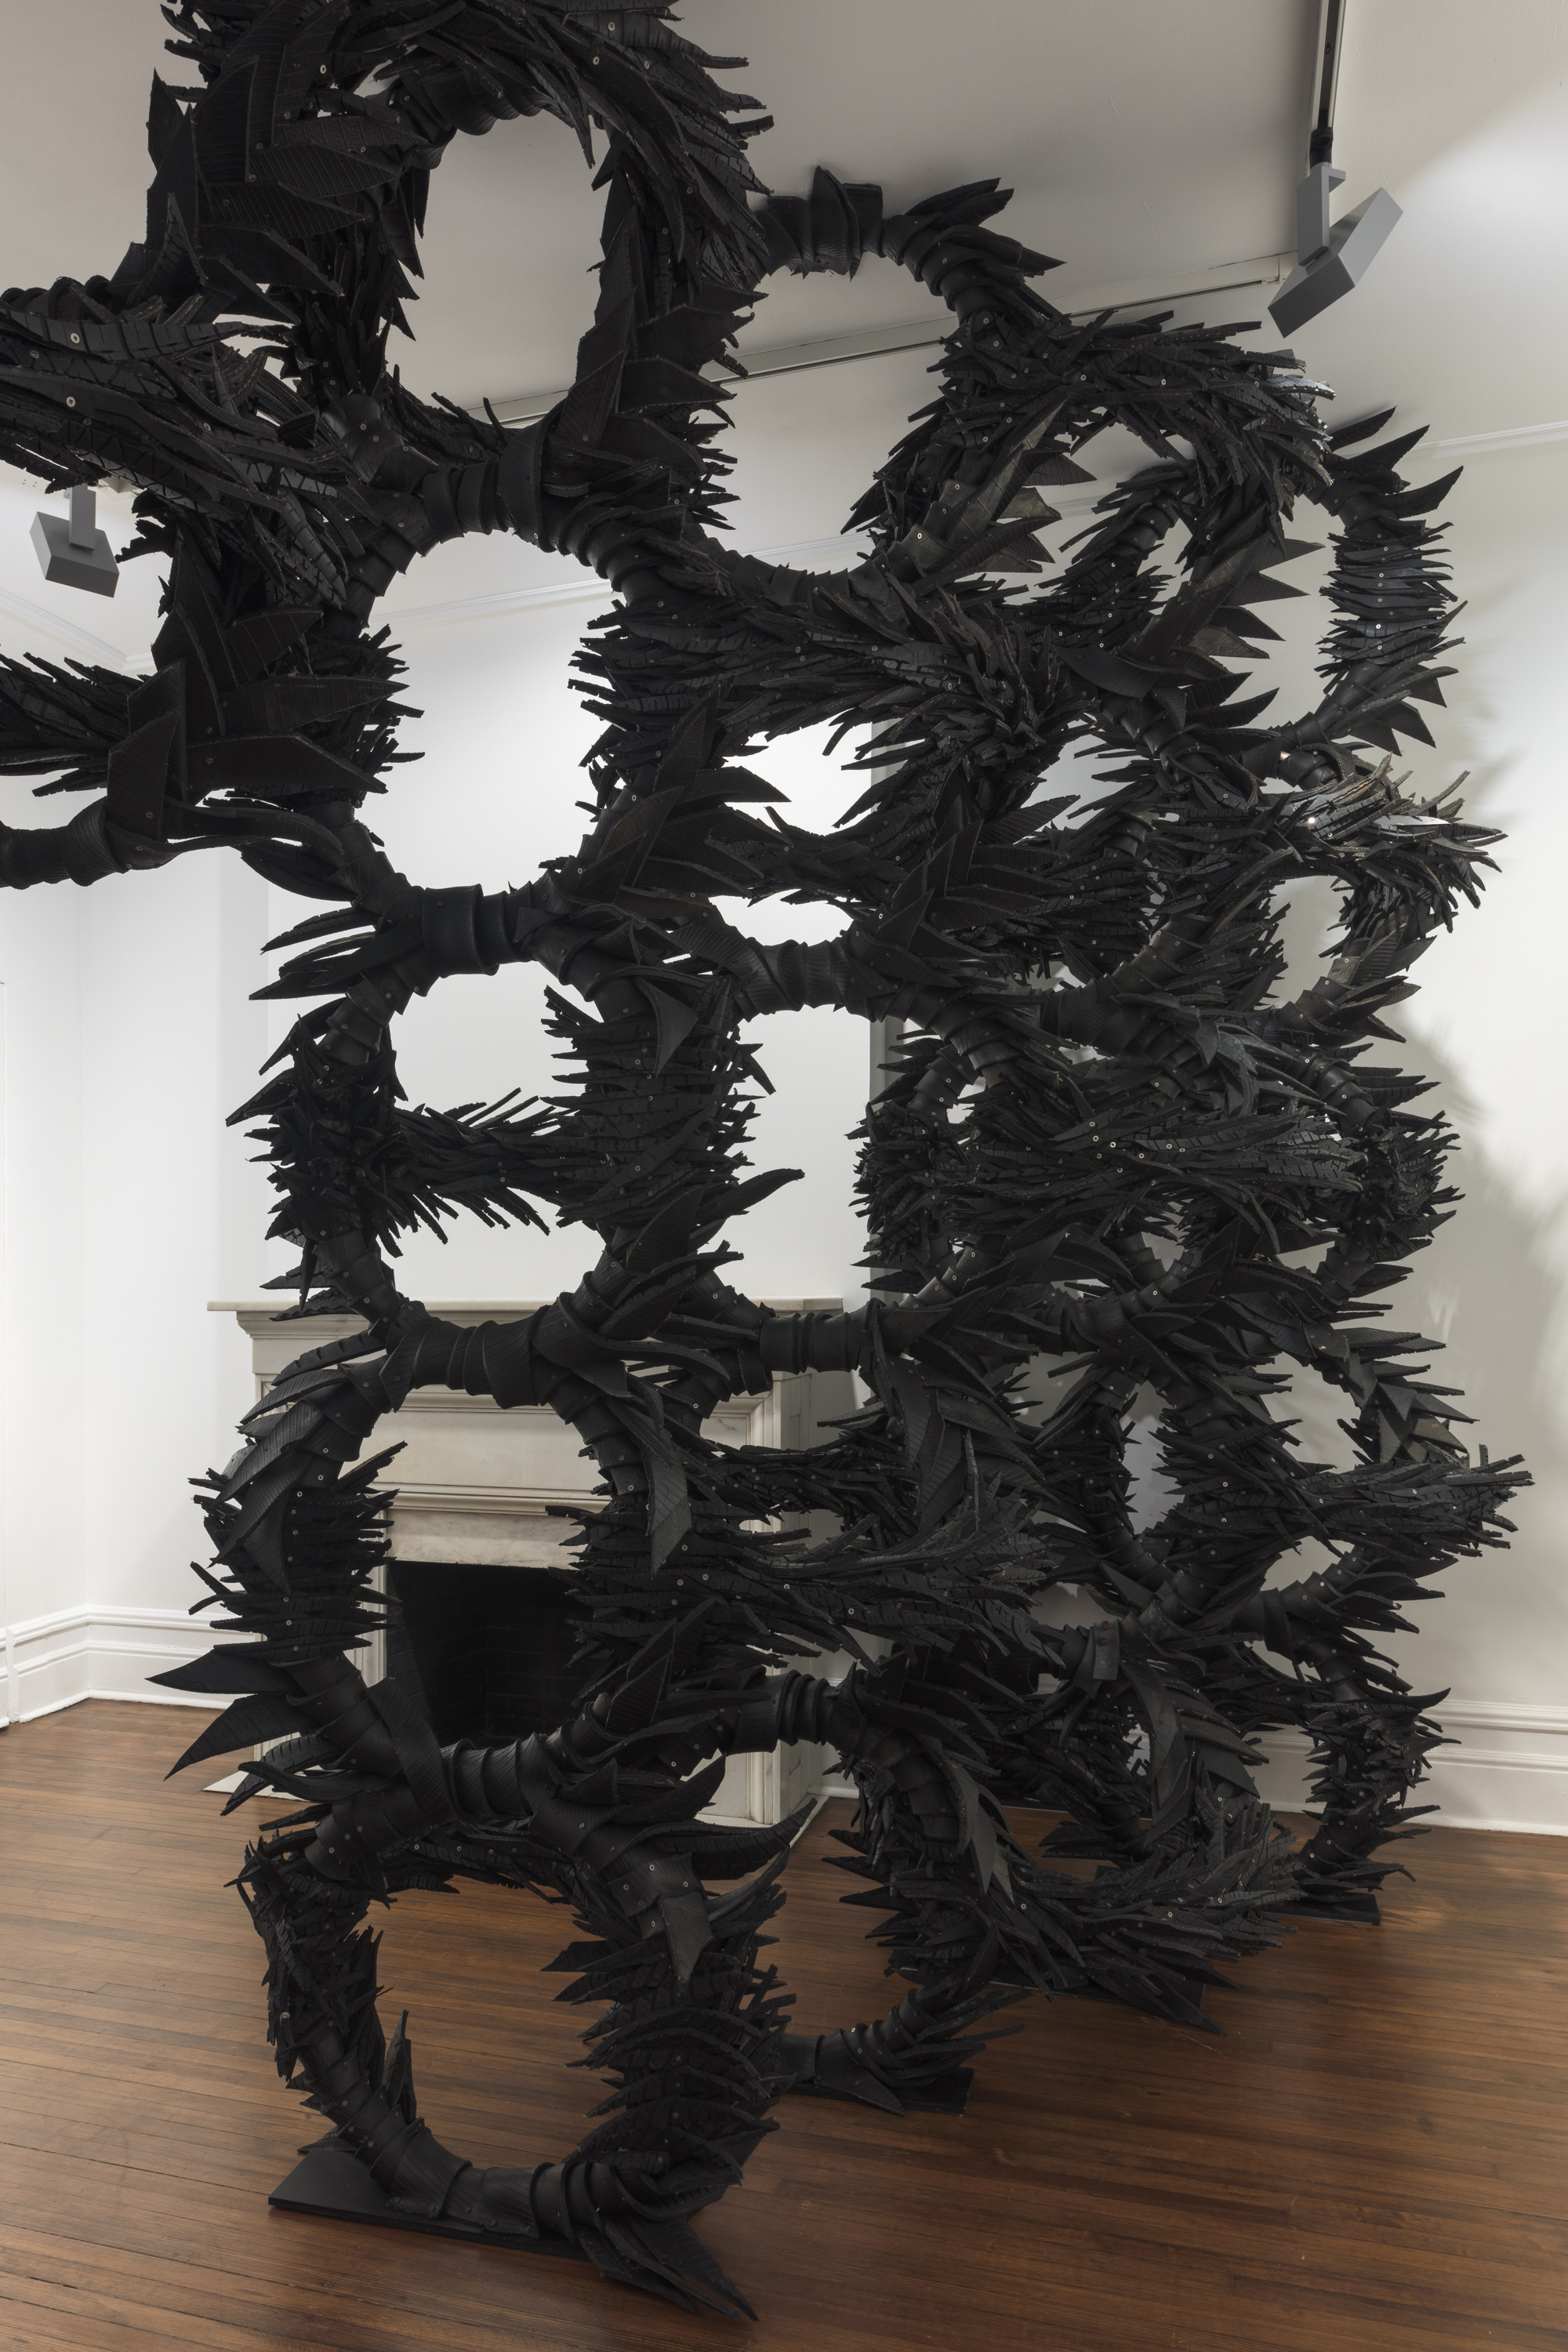 Installation image for Chakaia Booker: Public Opinion, at David Nolan Gallery